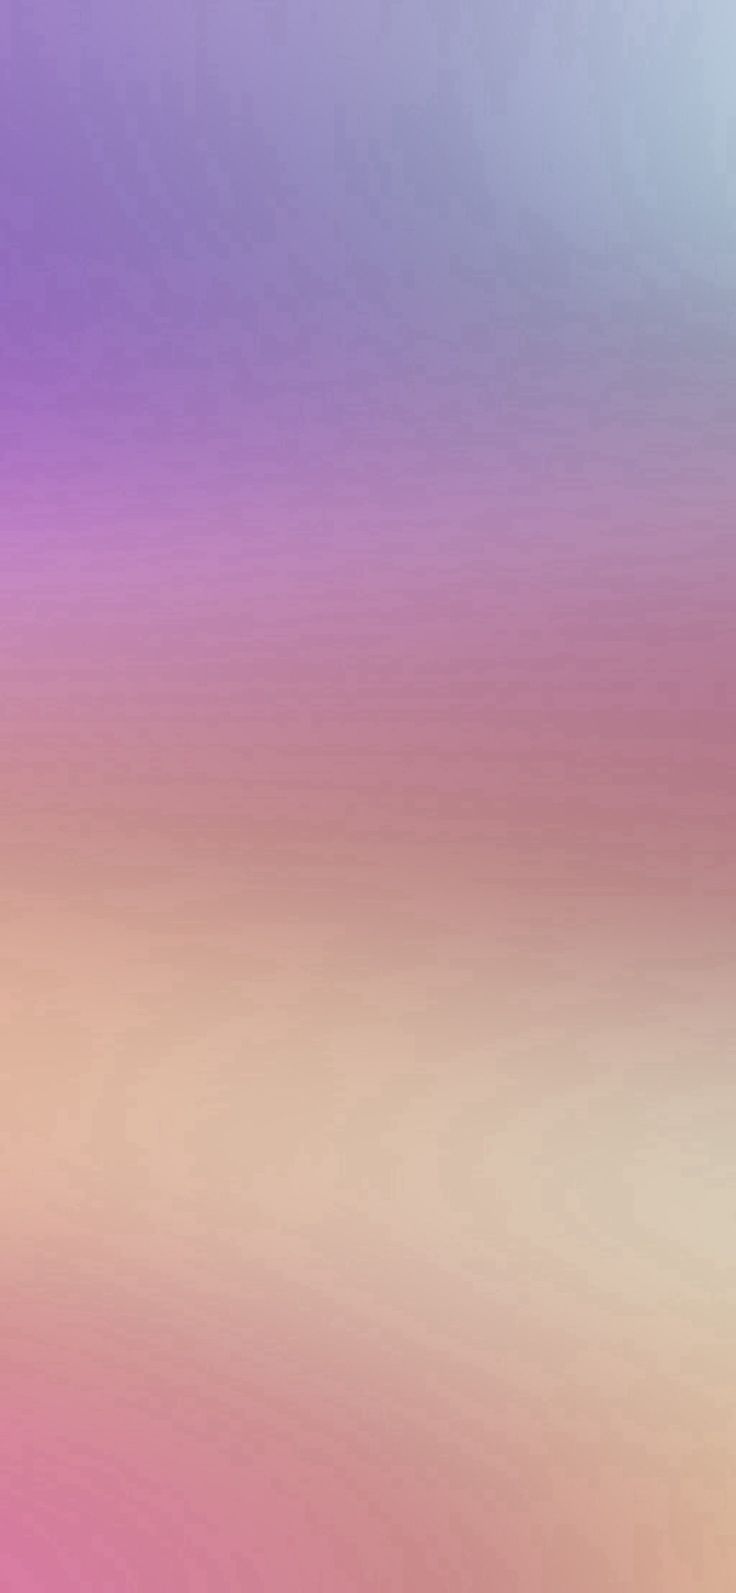 Abstract Purple Pink Blur Gradation